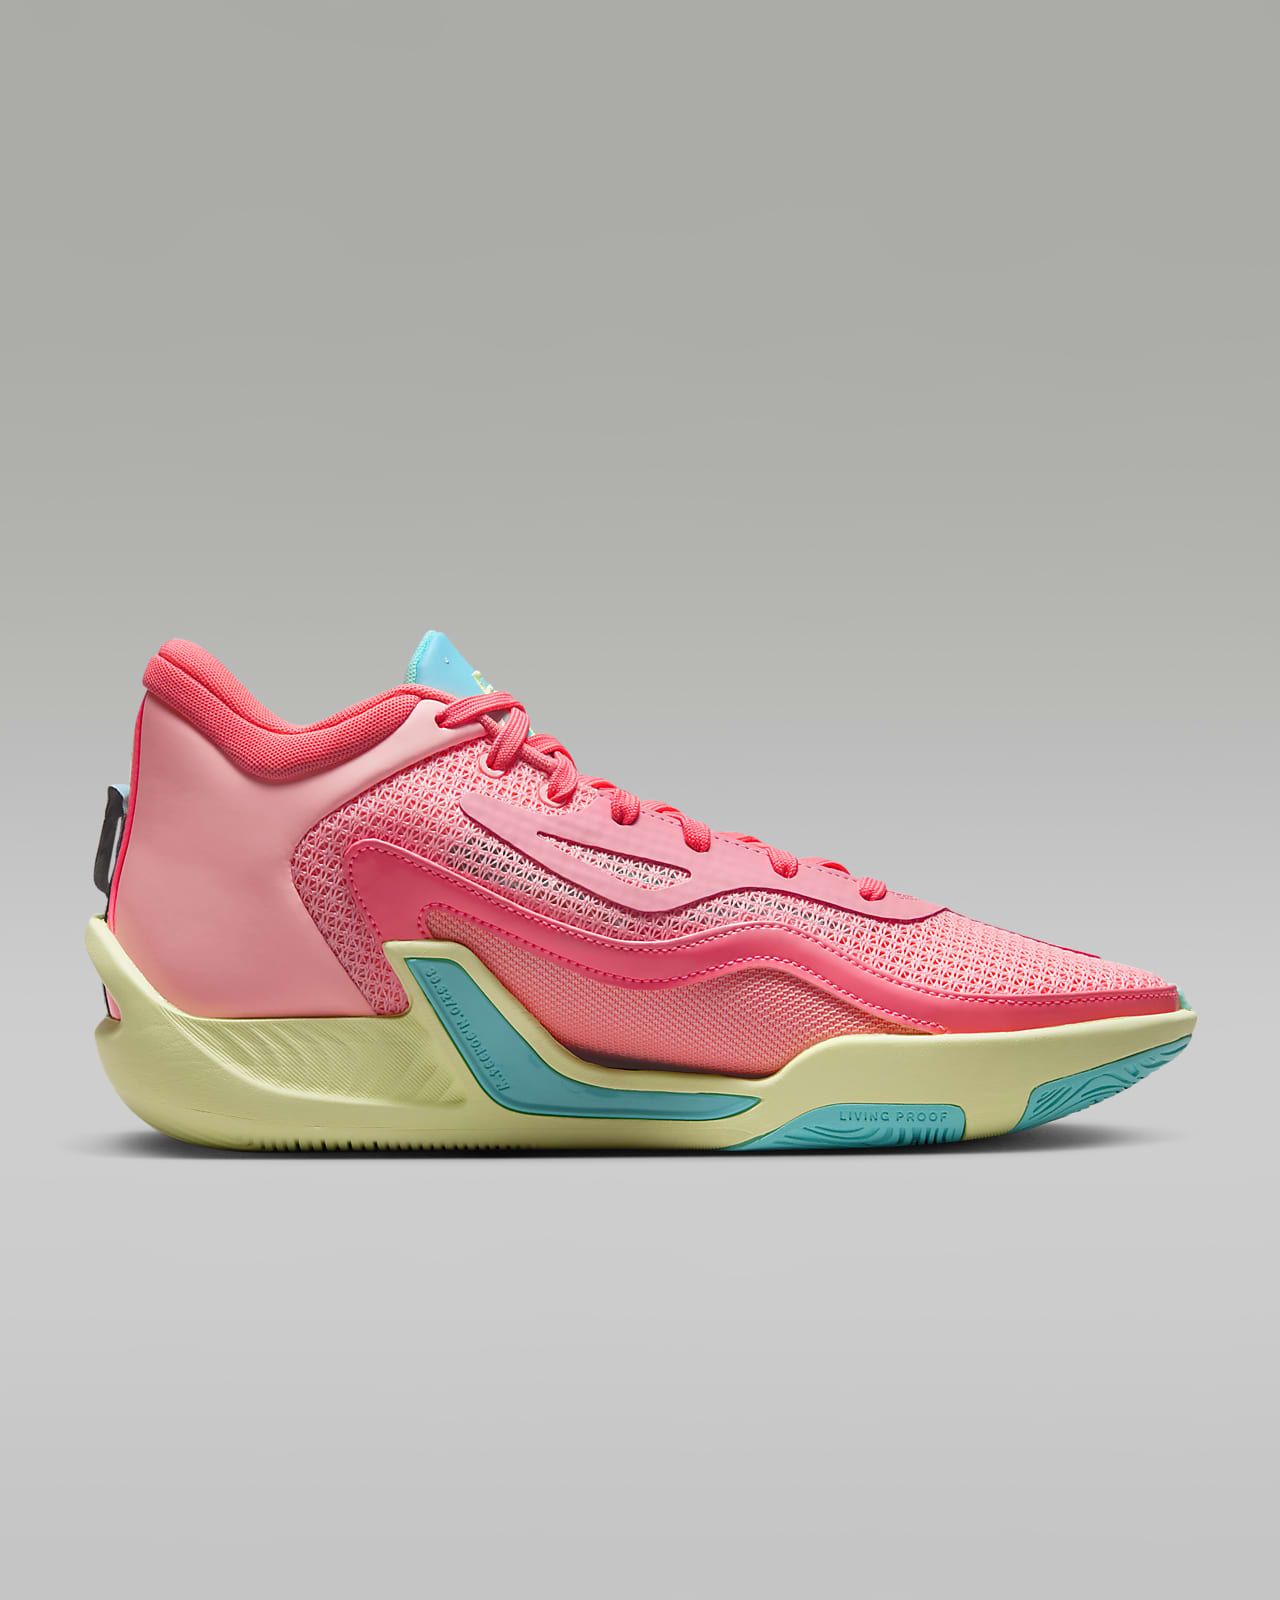 Basketball Pink Lemonade Tatum 1 Shoes Review 